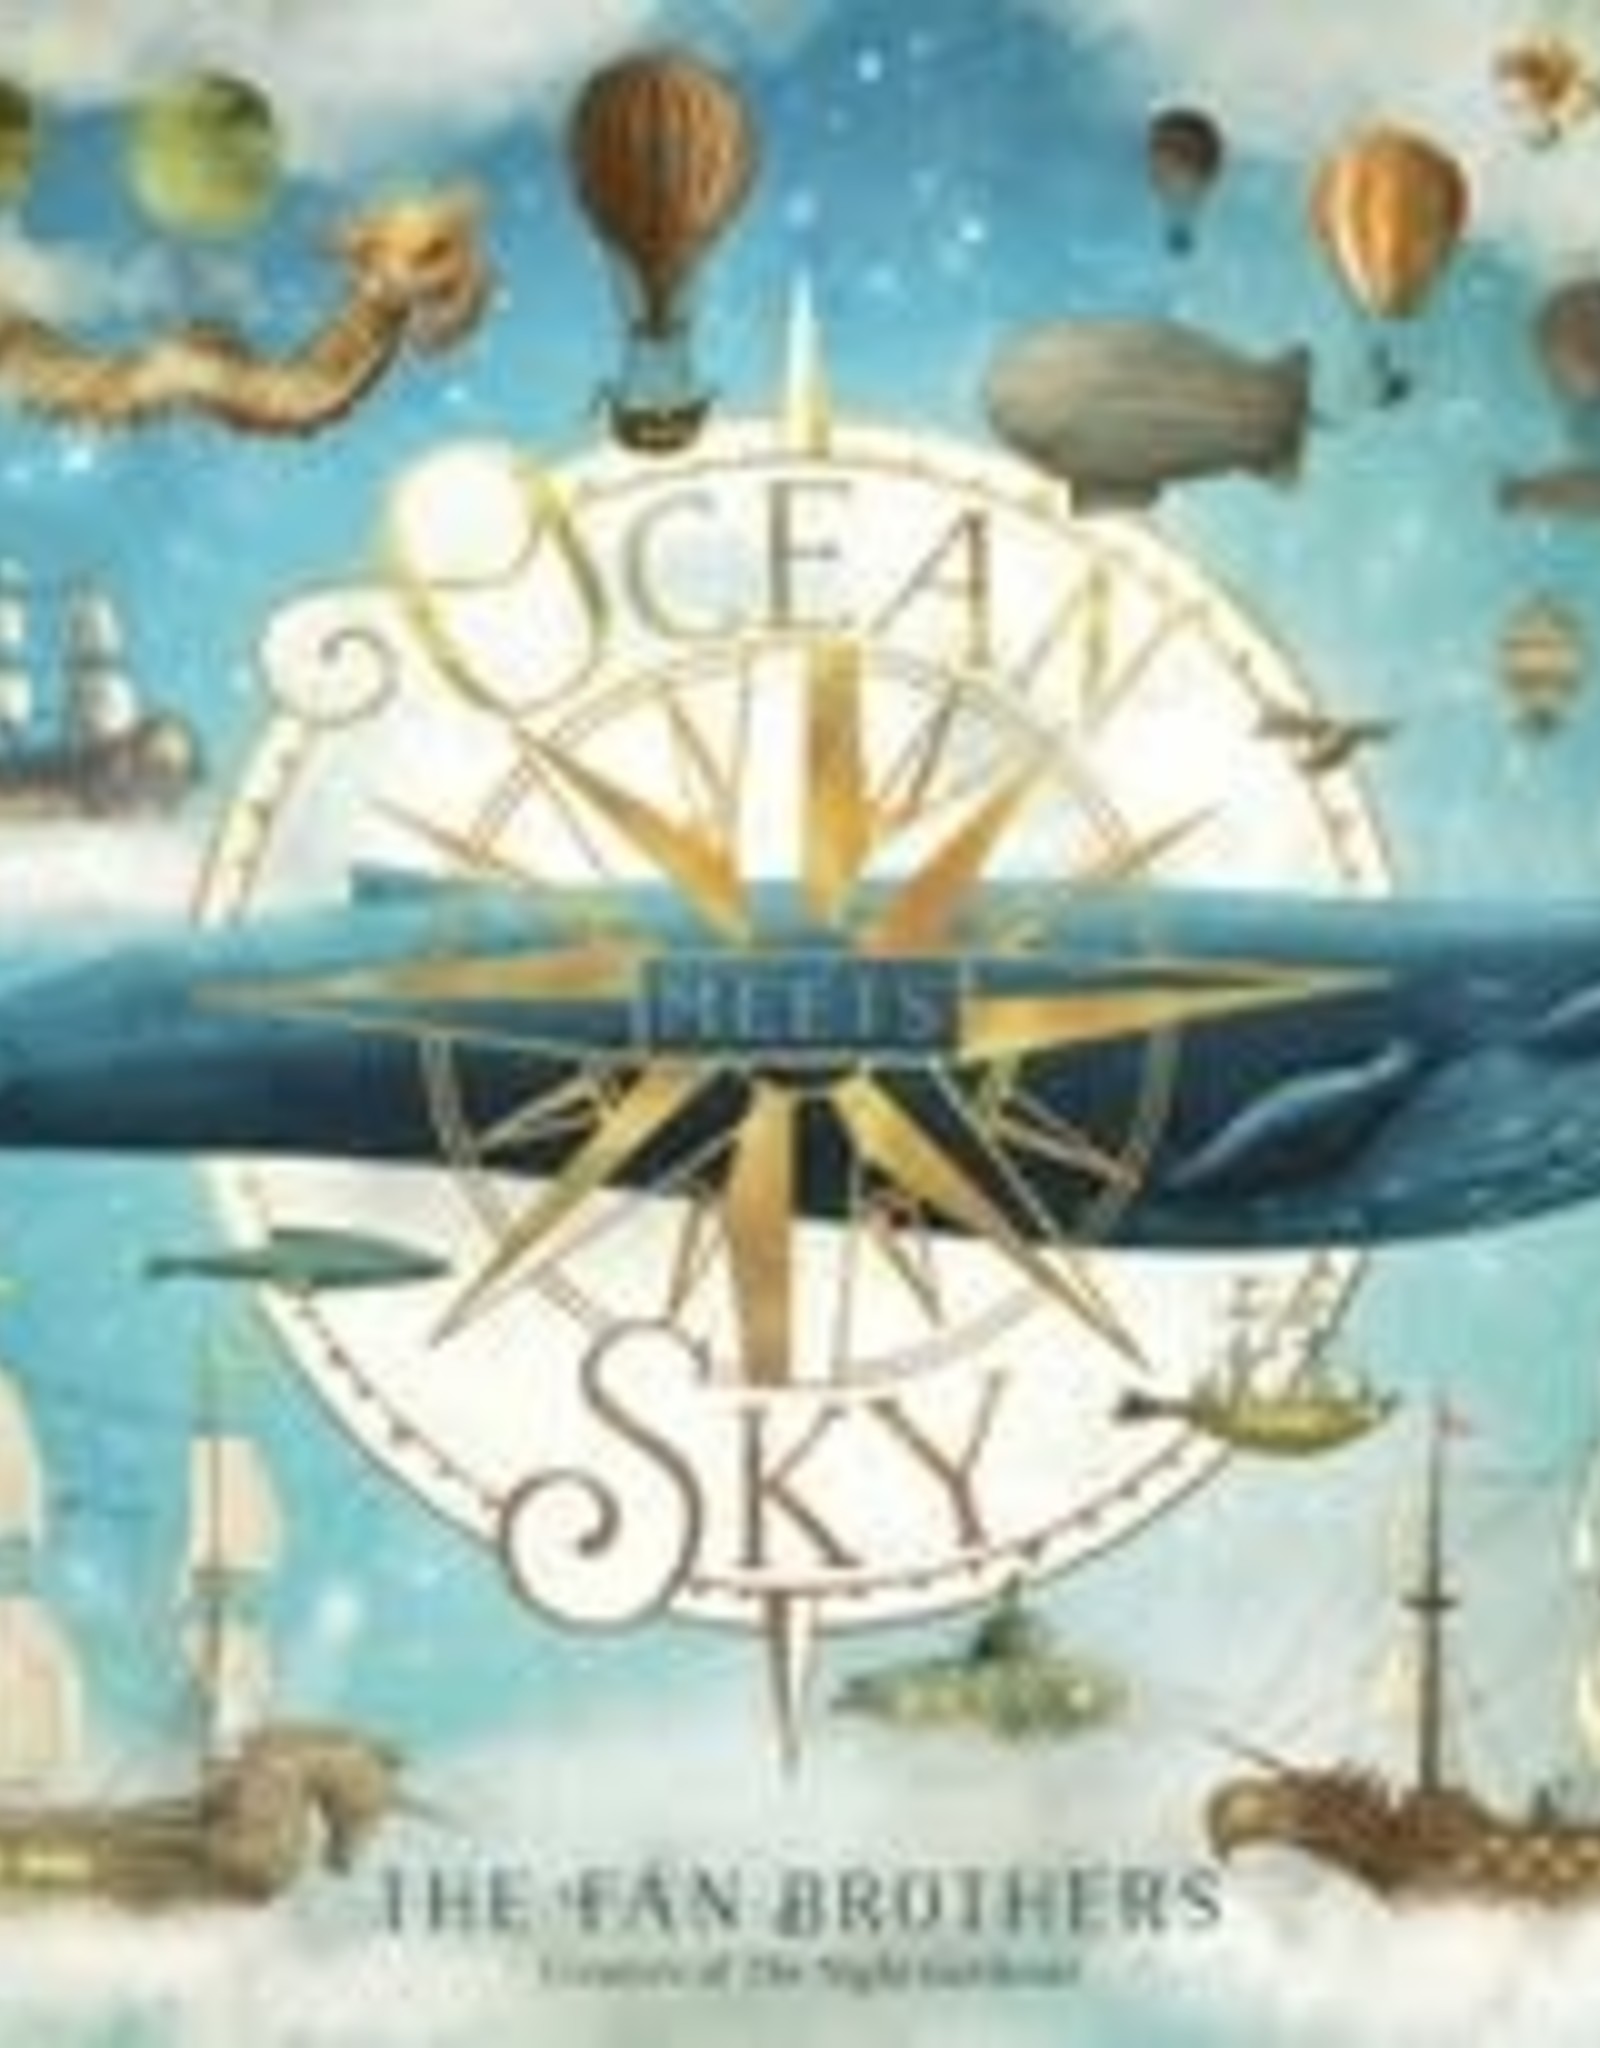 Simon & Schuster Ocean Meets Sky